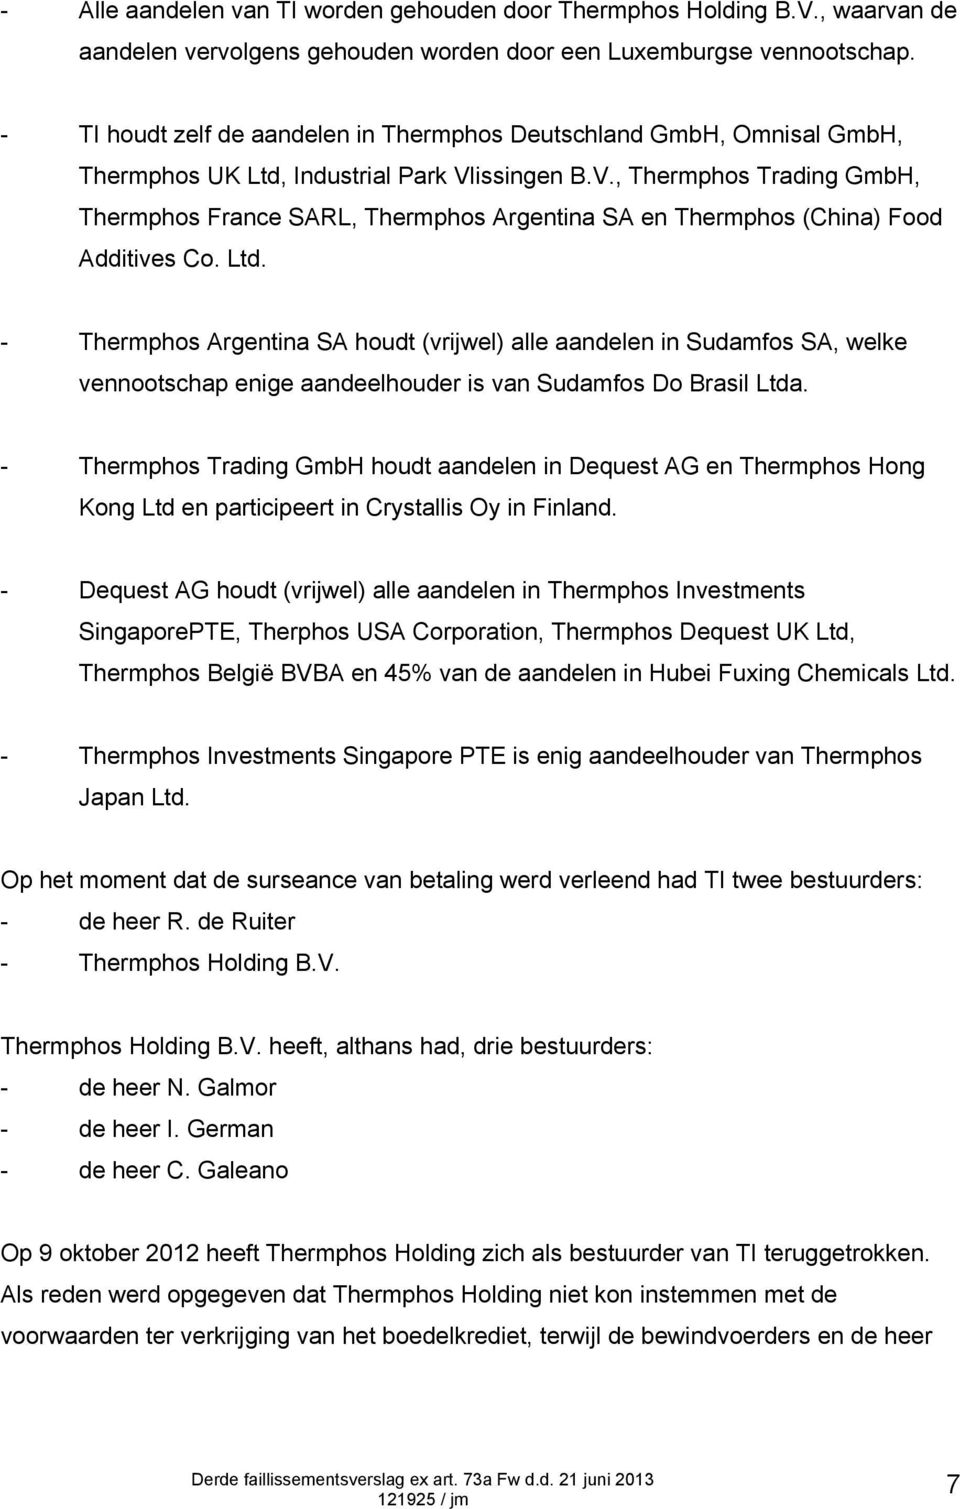 issingen B.V., Thermphos Trading GmbH, Thermphos France SARL, Thermphos Argentina SA en Thermphos (China) Food Additives Co. Ltd.